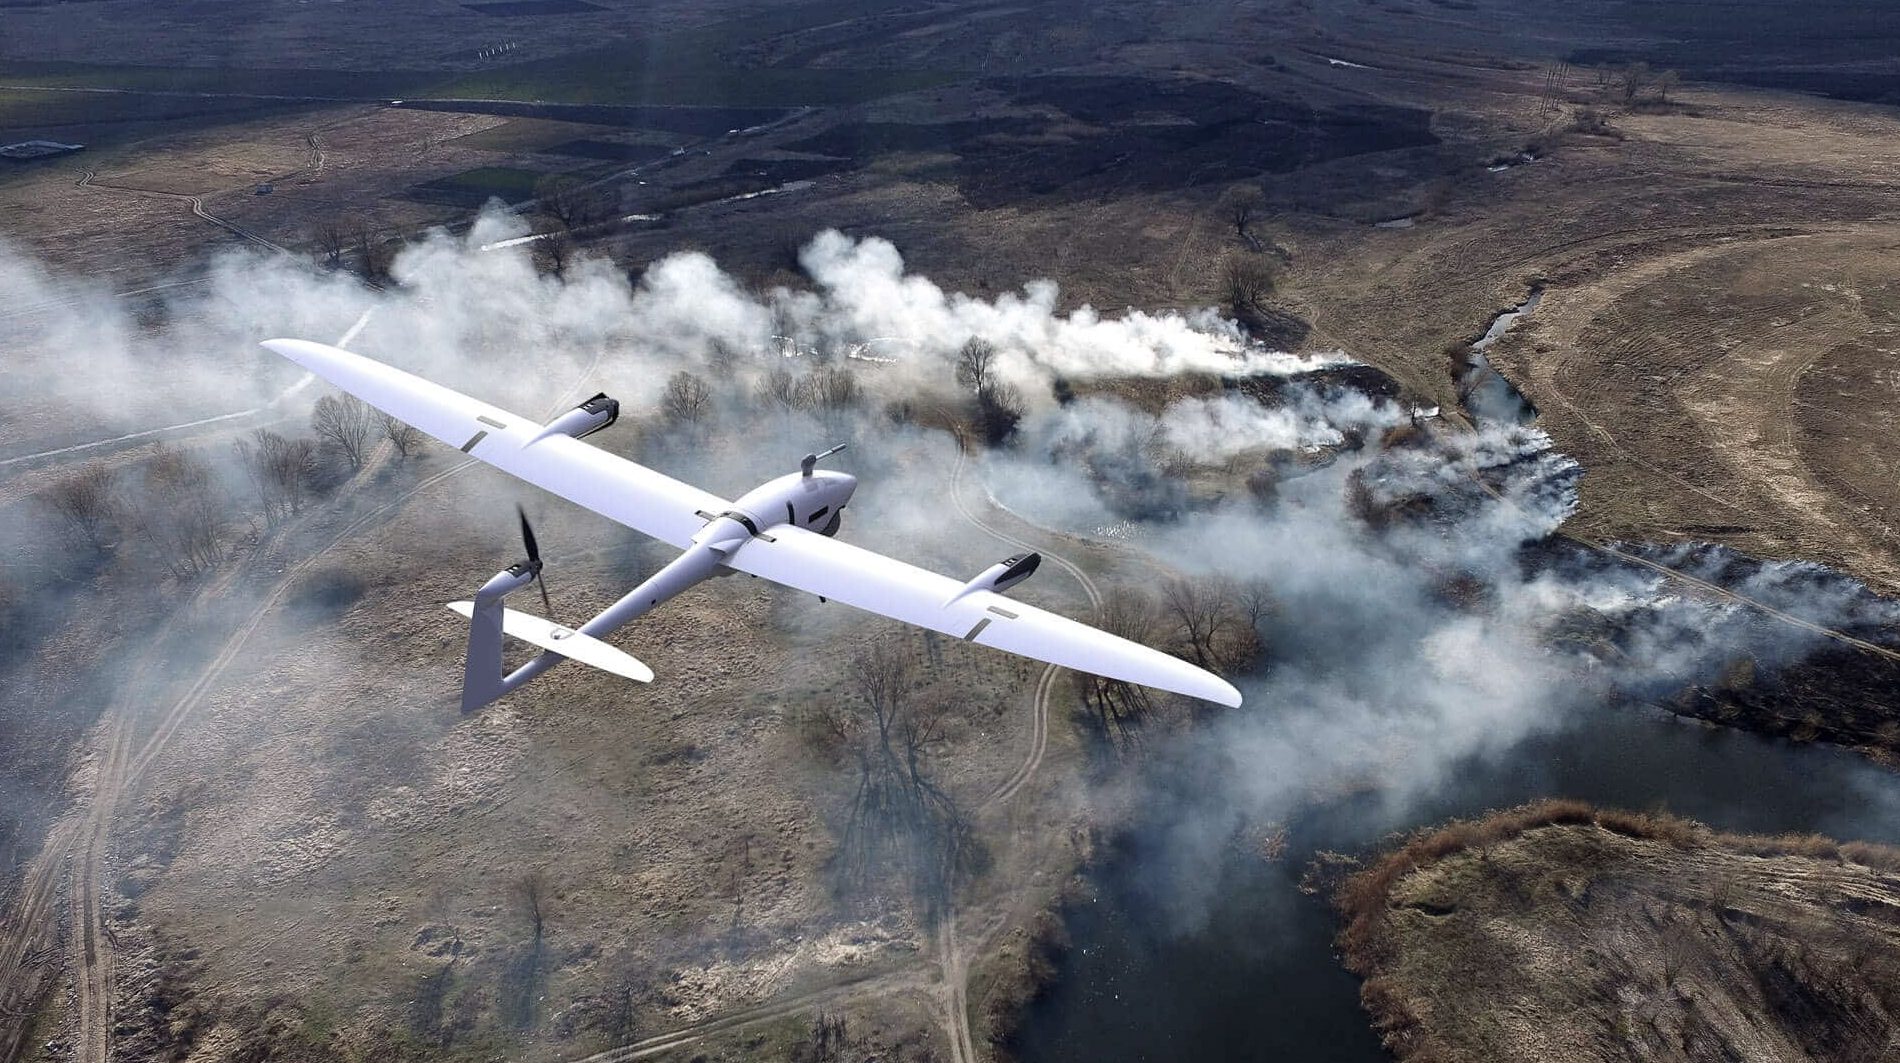 Aussies splash out $140M AUD for tactical drones